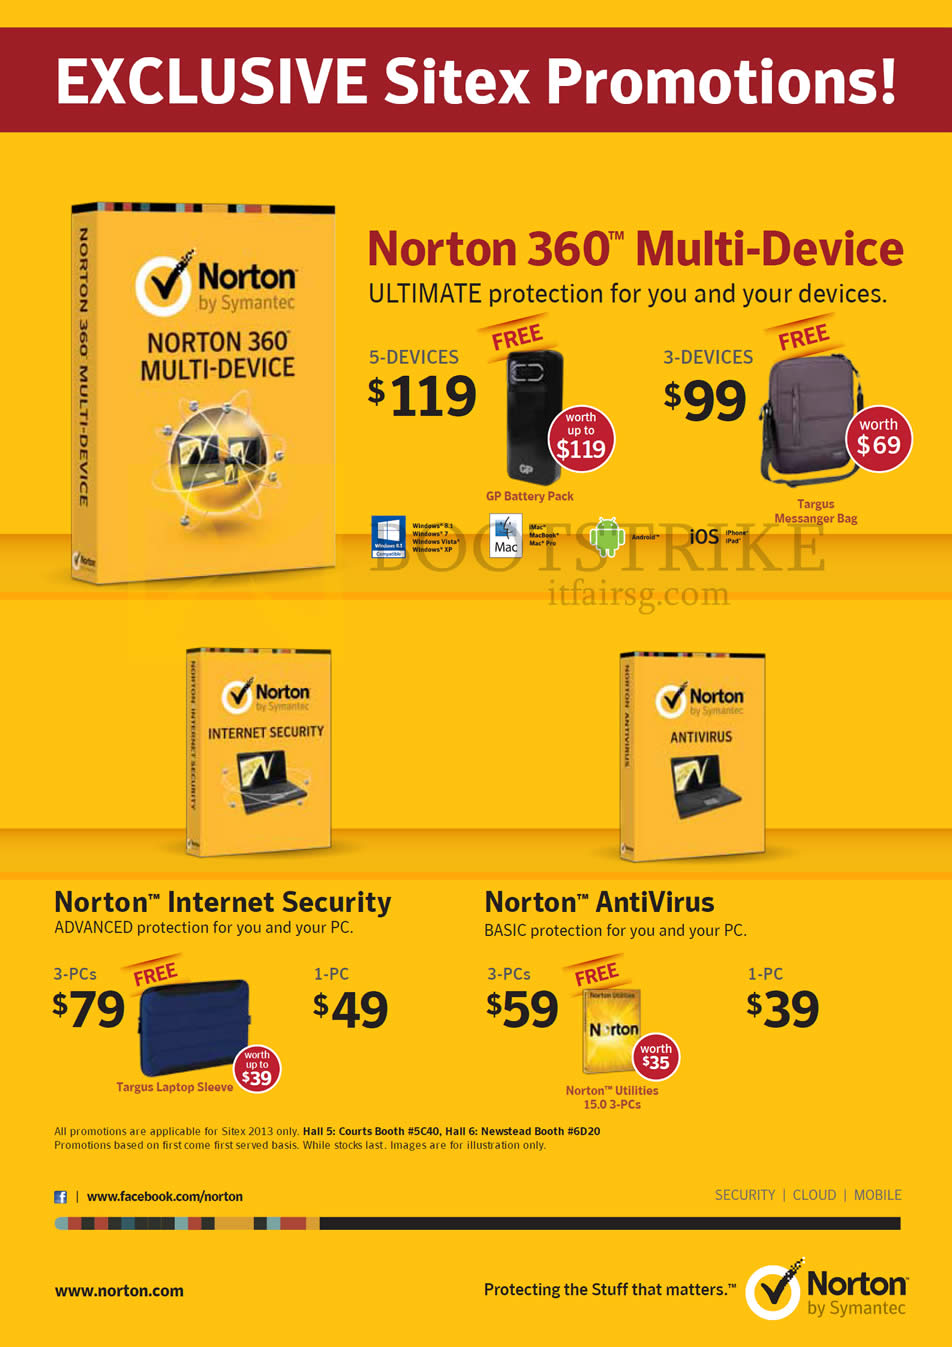 SITEX 2013 price list image brochure of Norton 360 Multi Device, Internet Security, AntiVirus